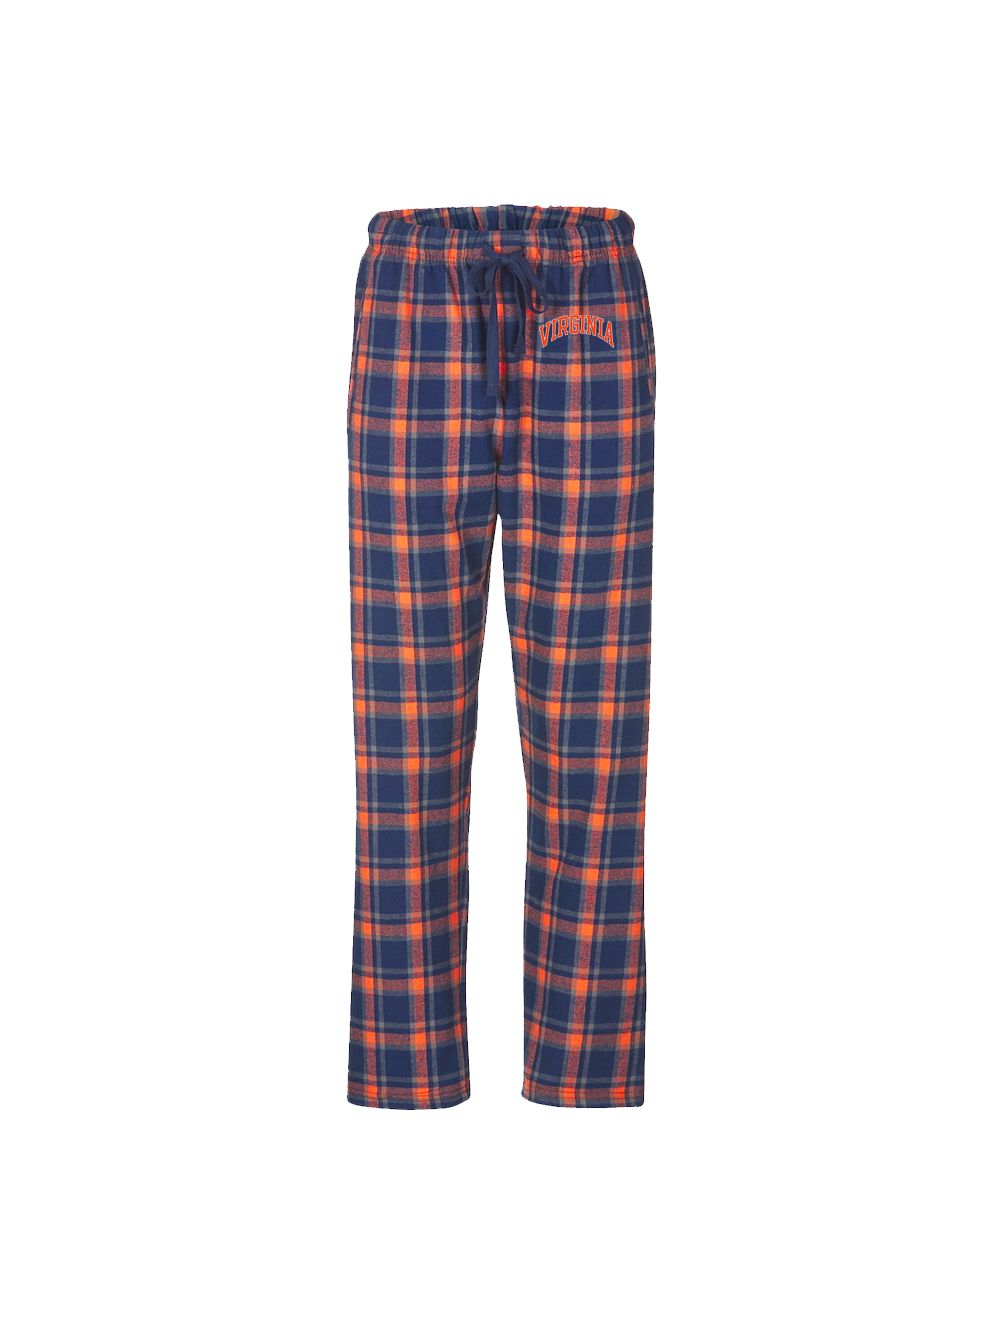 Boxercraft Flannel Shorts